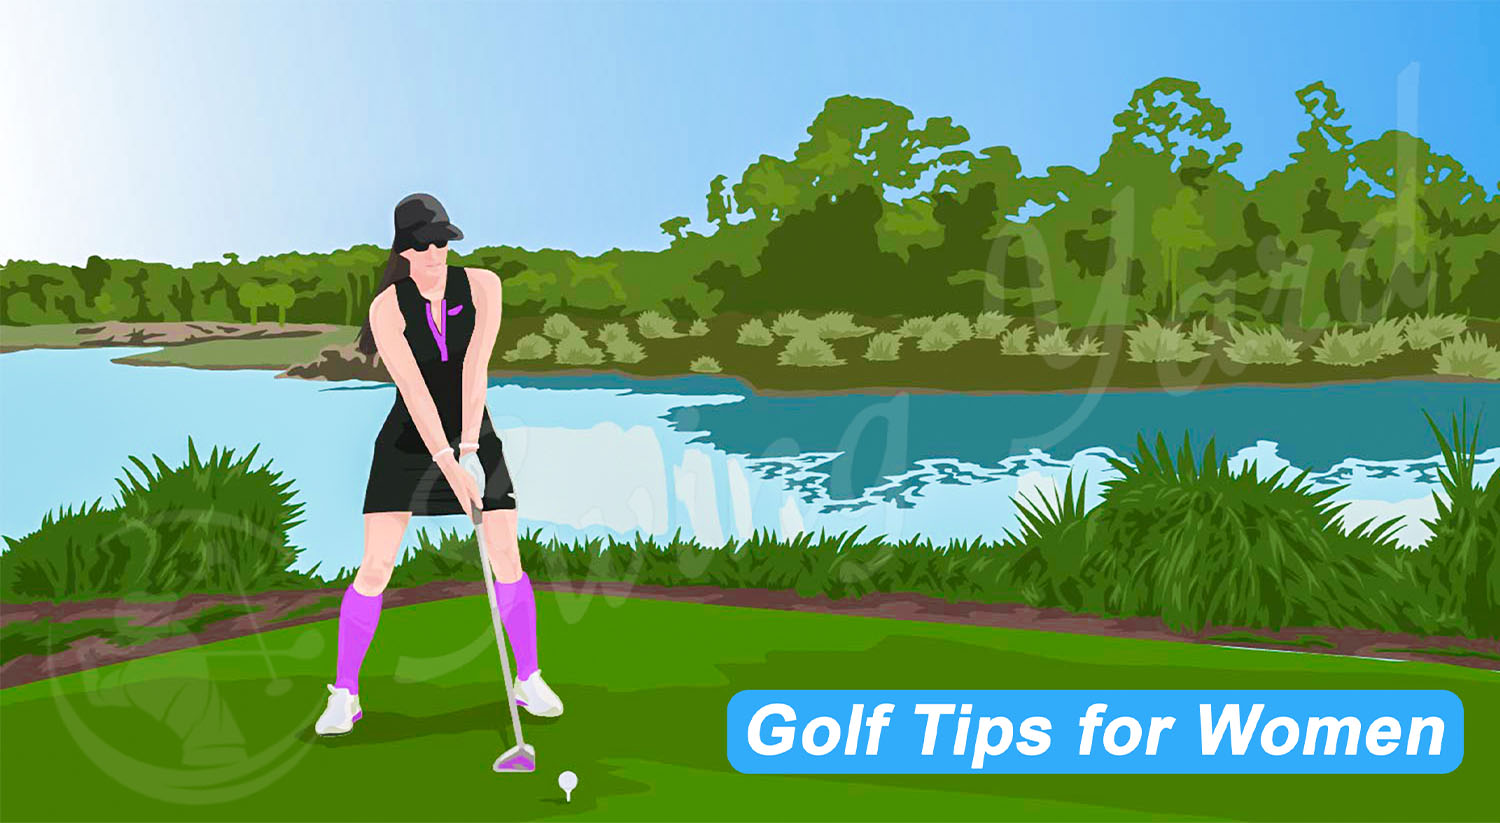 A golfer using golf tips for women